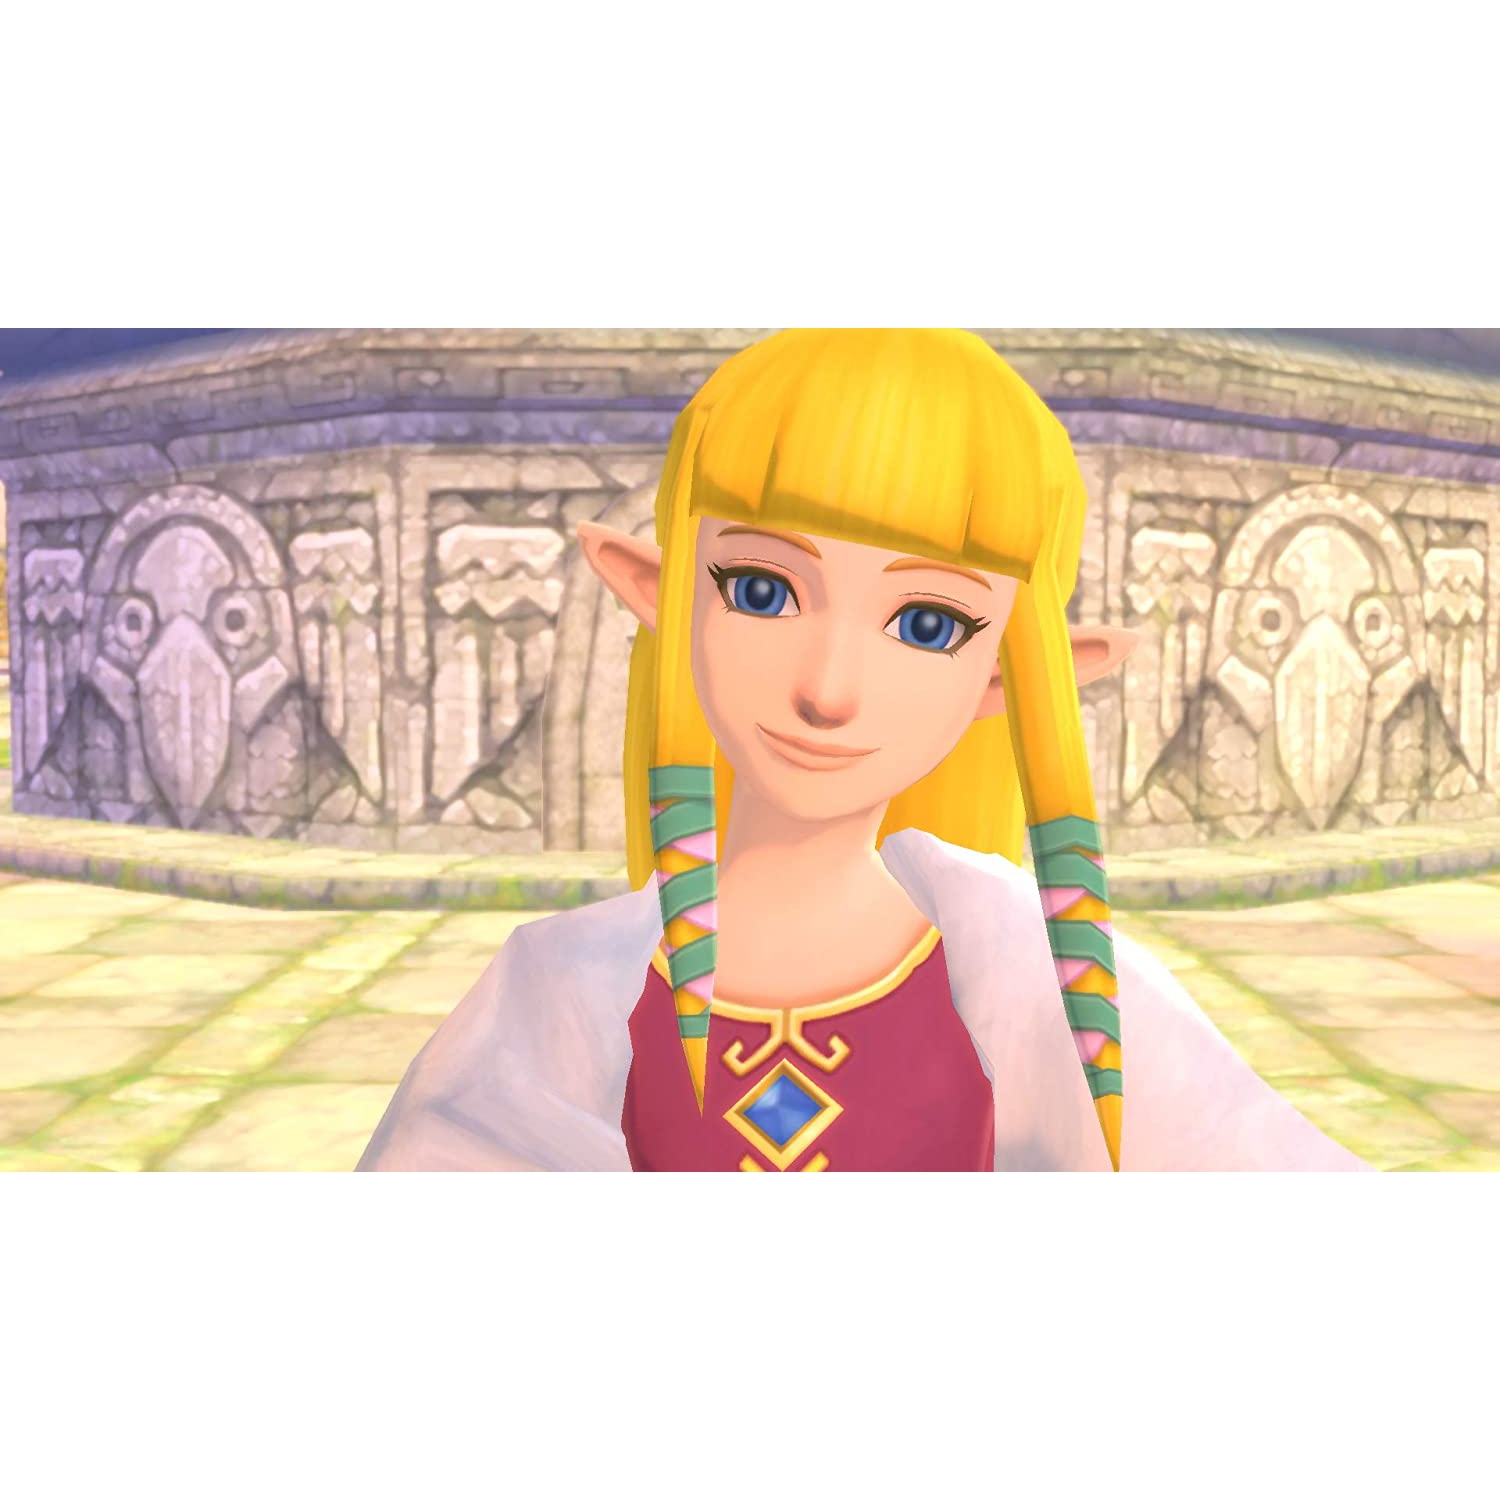 The Legend of Zelda: Skyward Sword HD Nintendo Switch Lite, Nintendo Switch  HACPAZ89A - Best Buy